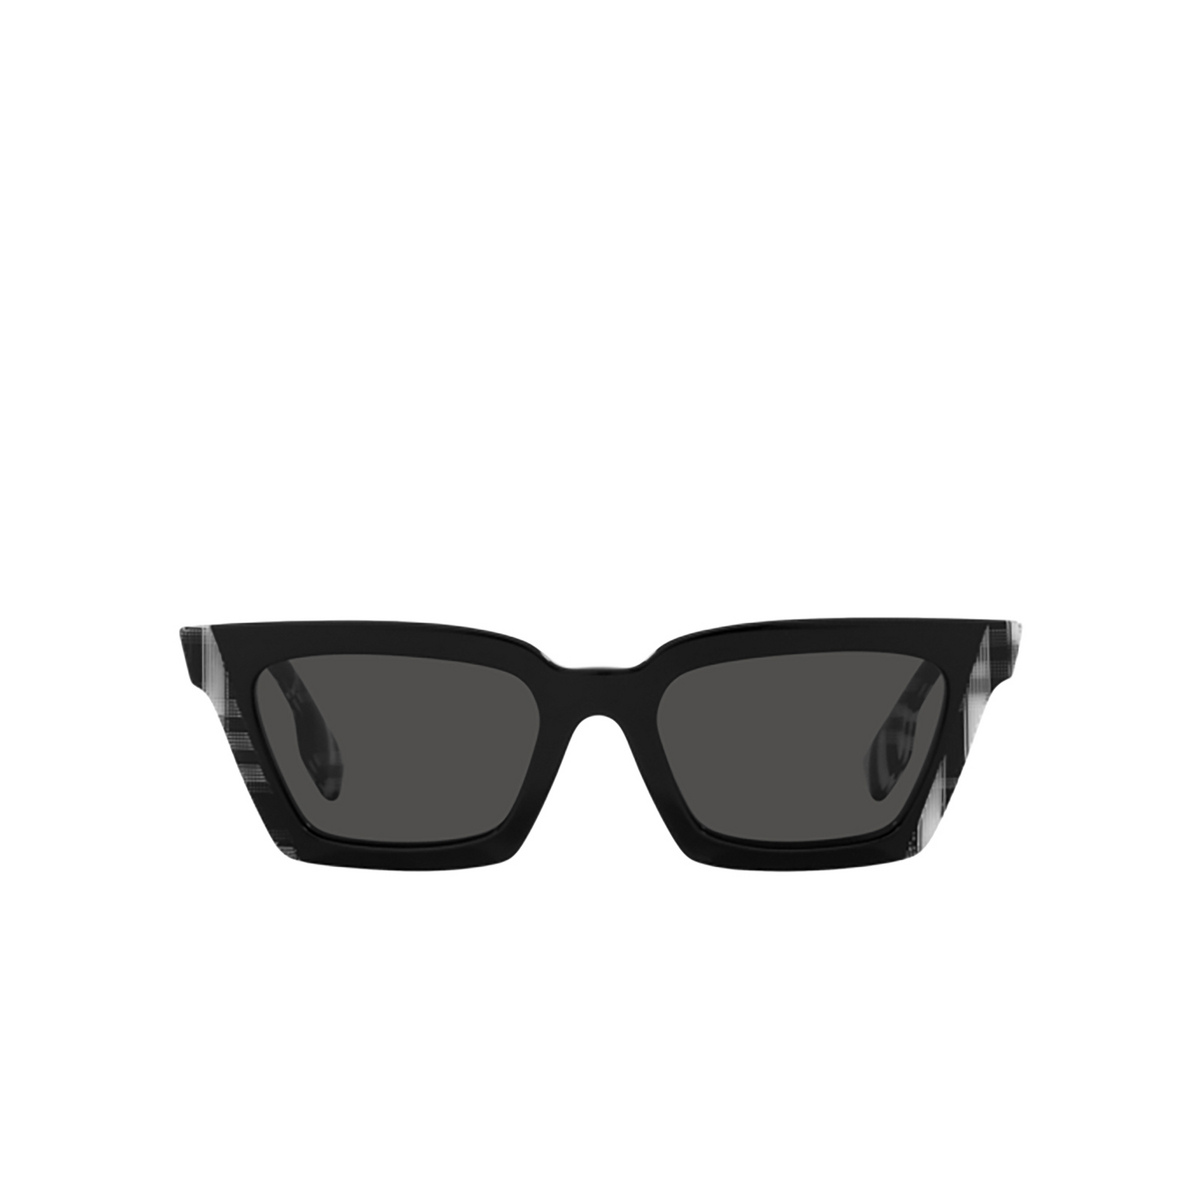 Burberry BRIAR Sunglasses 405187 Black / Check White Black - front view